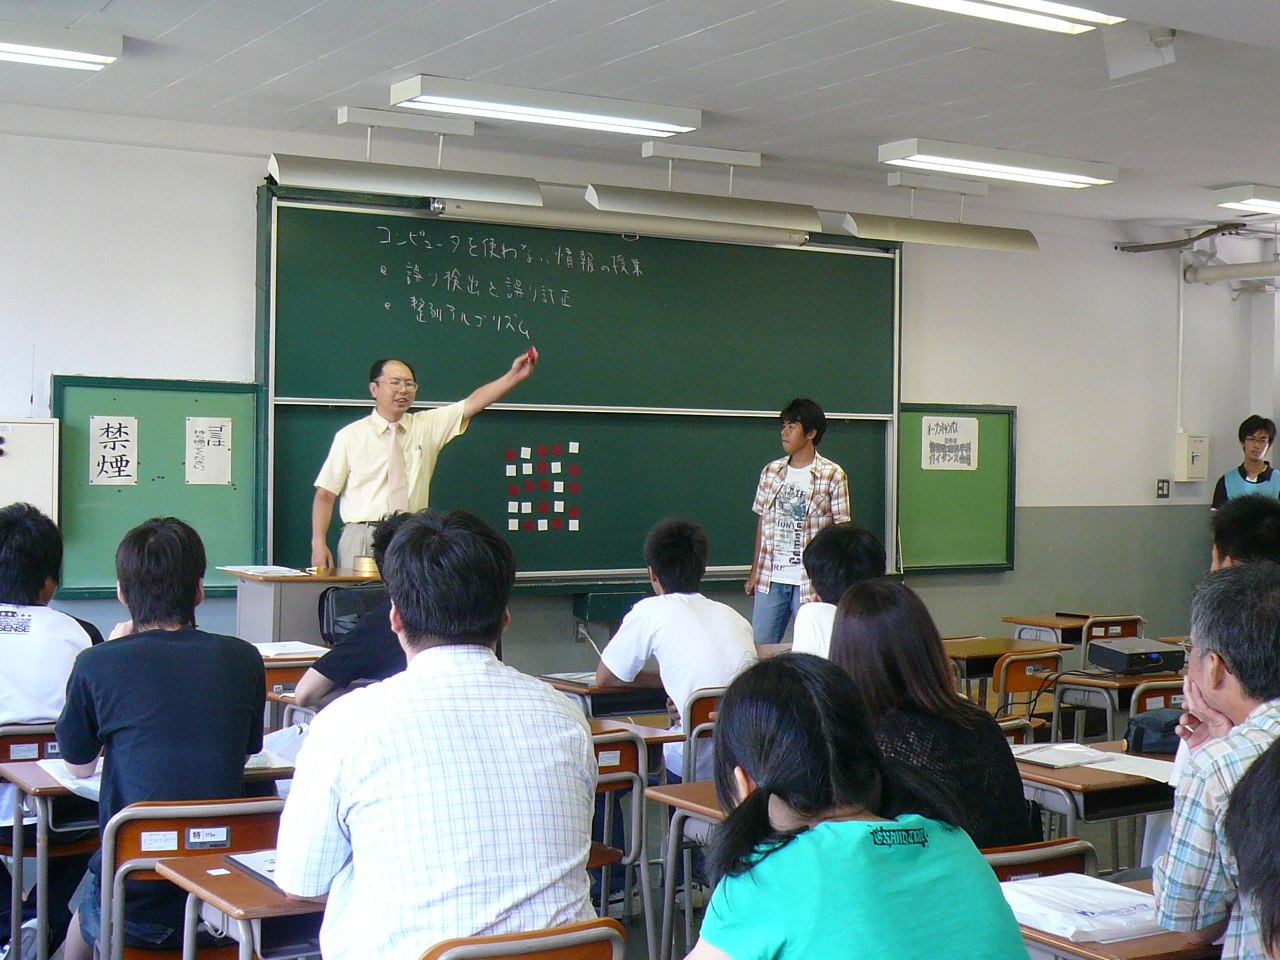 CS Unplugged in a High School Classroom, Japan